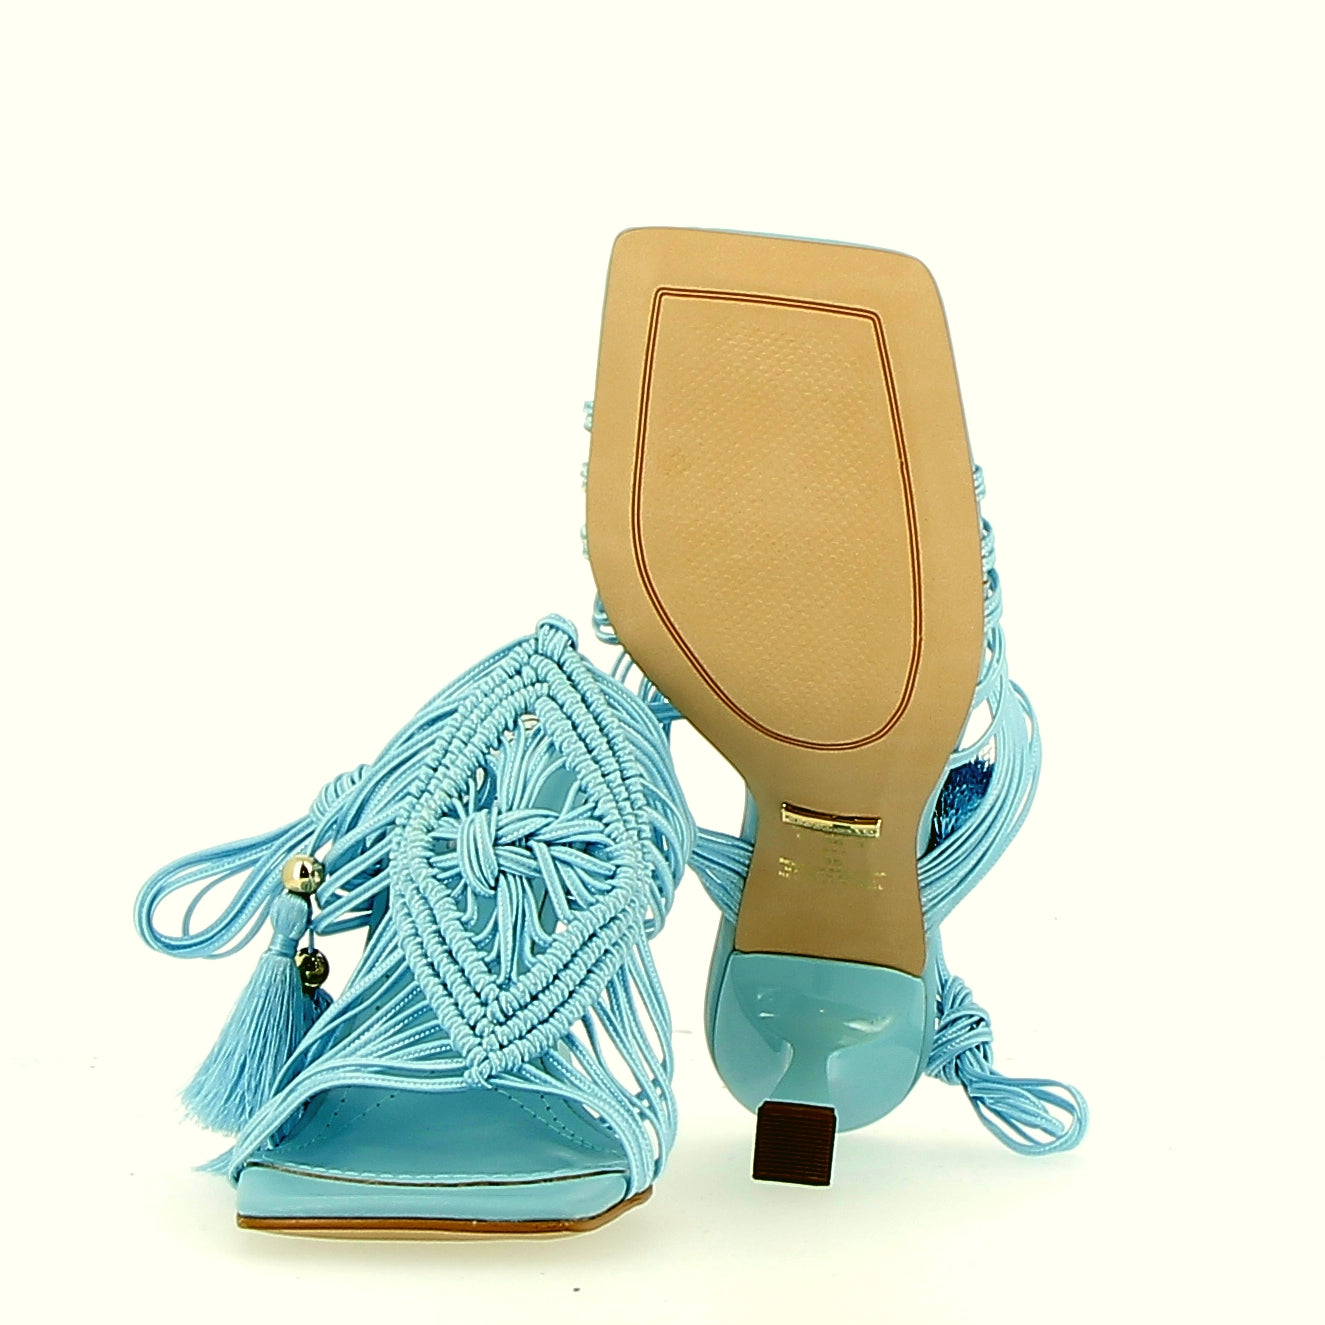 Celeste lace-up crochet-type sandal with lace and pom poms